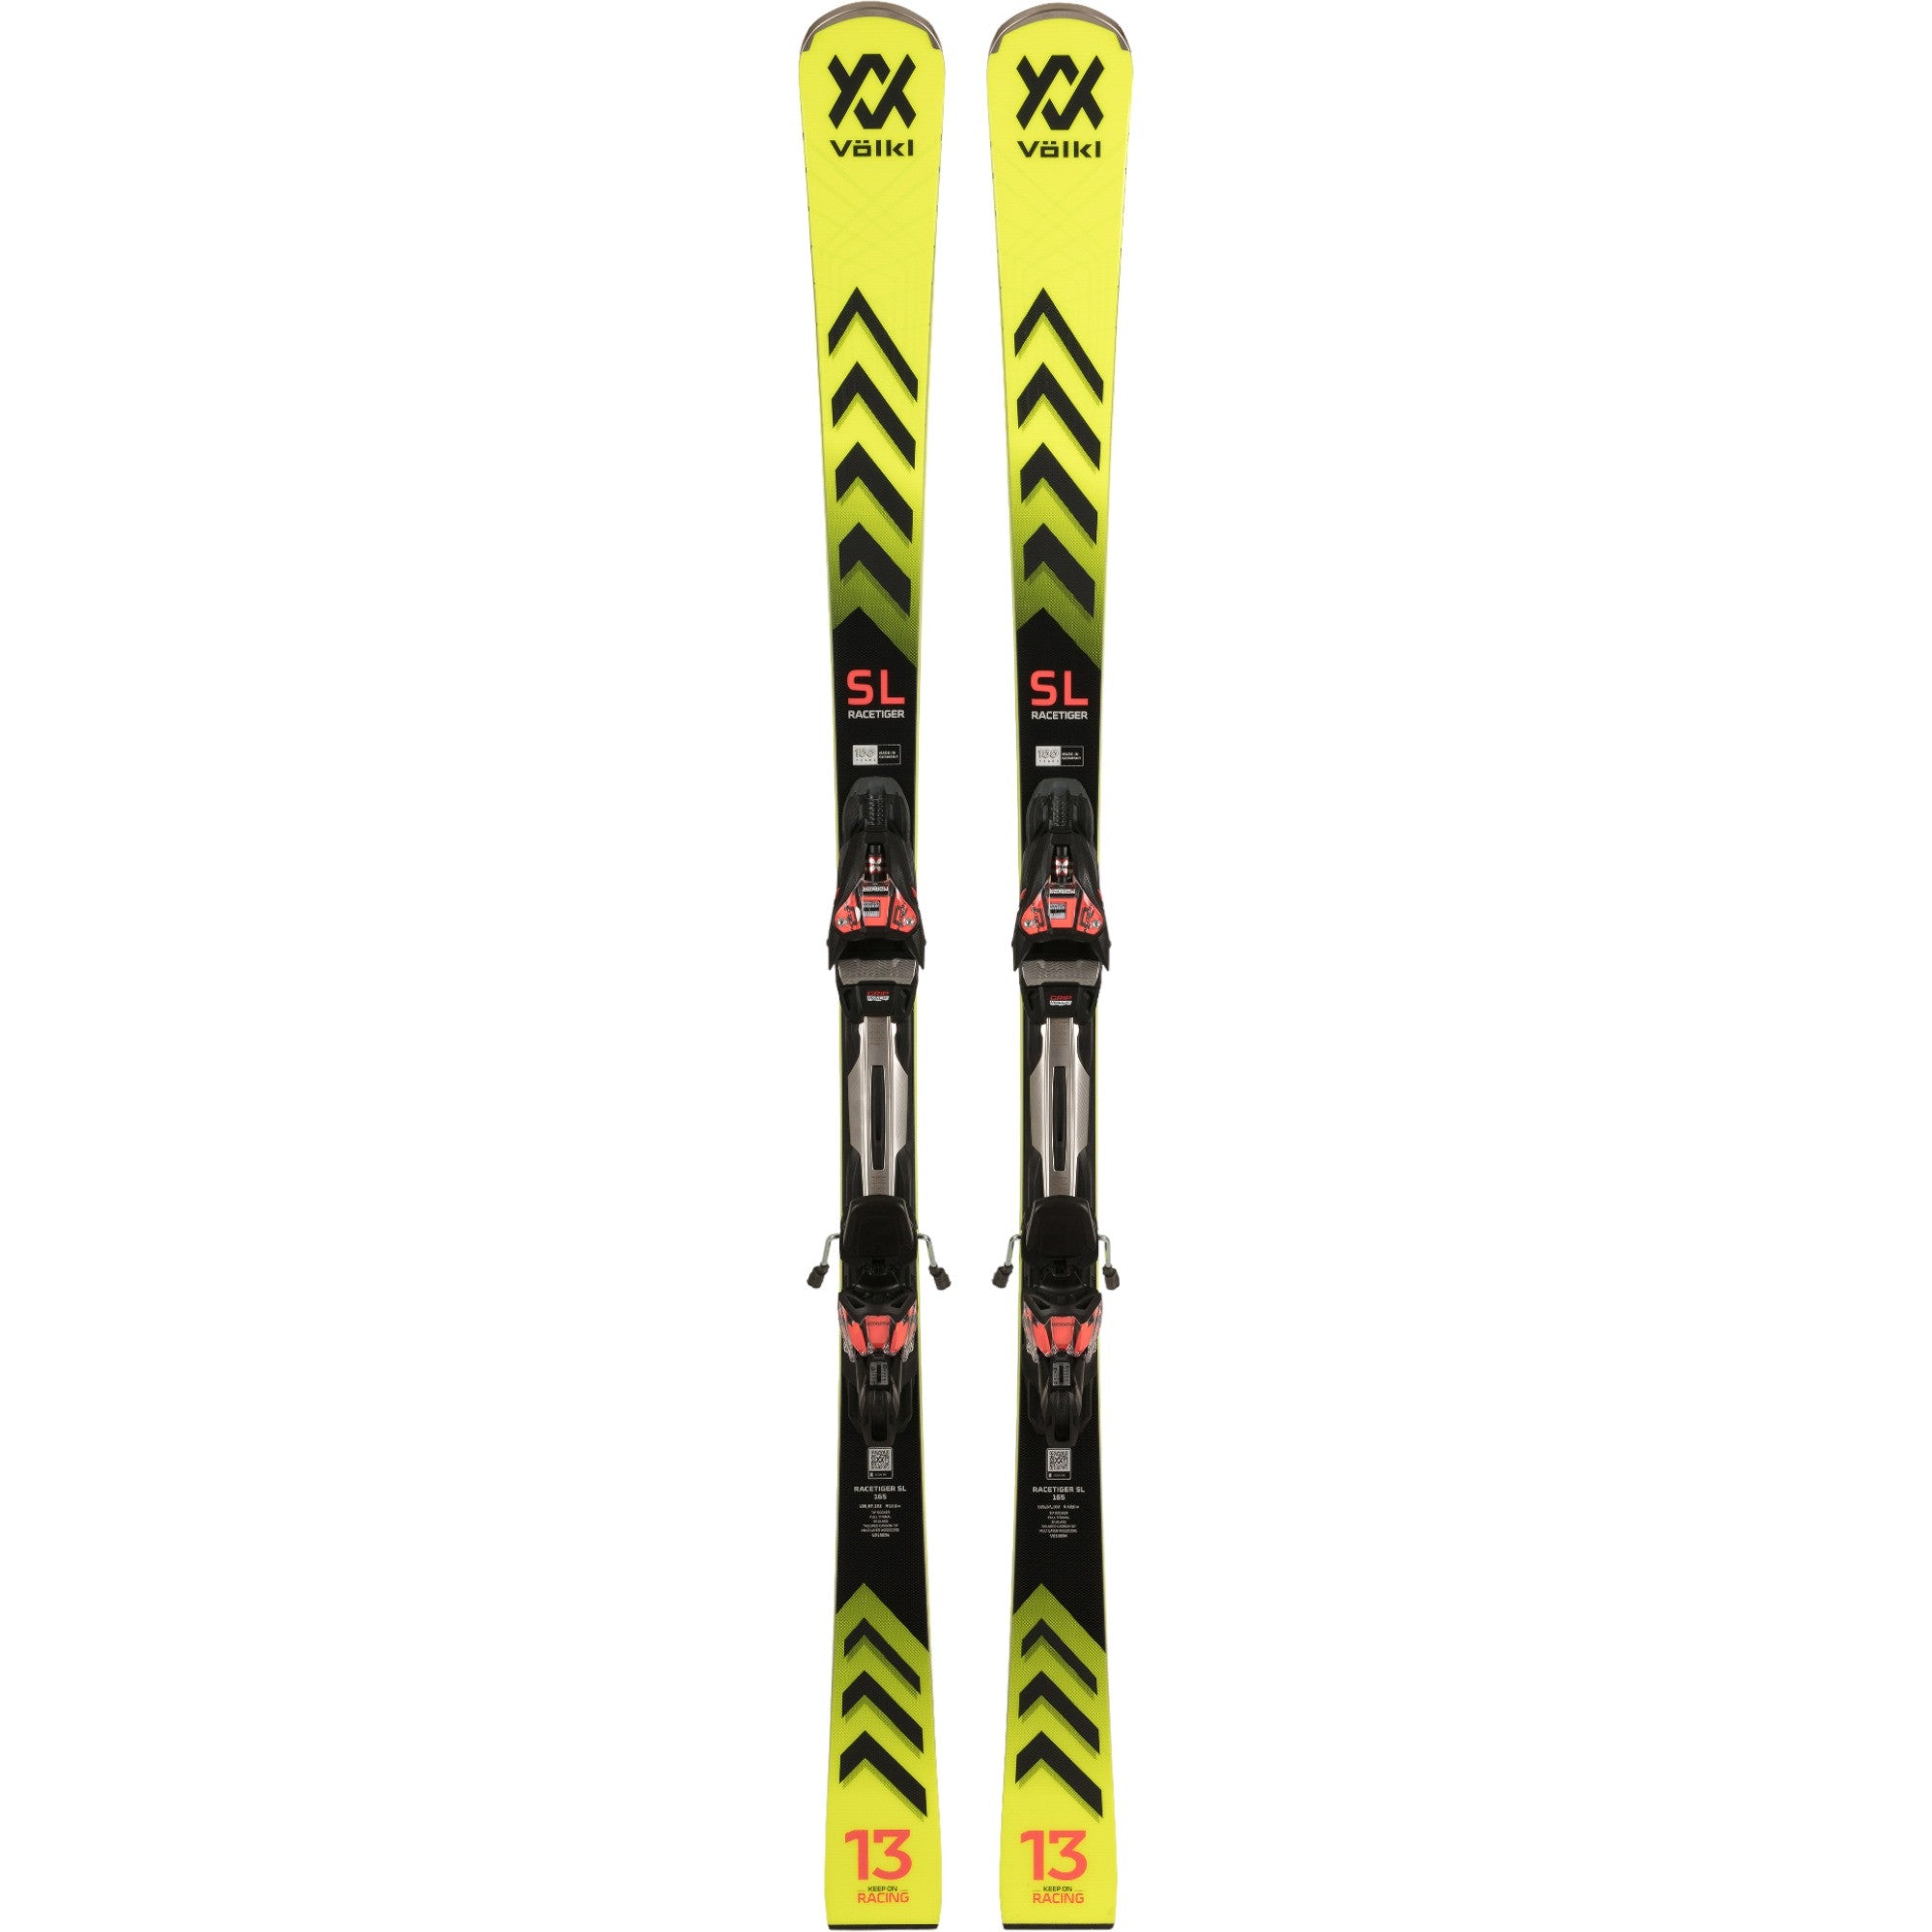 Skis with bindings